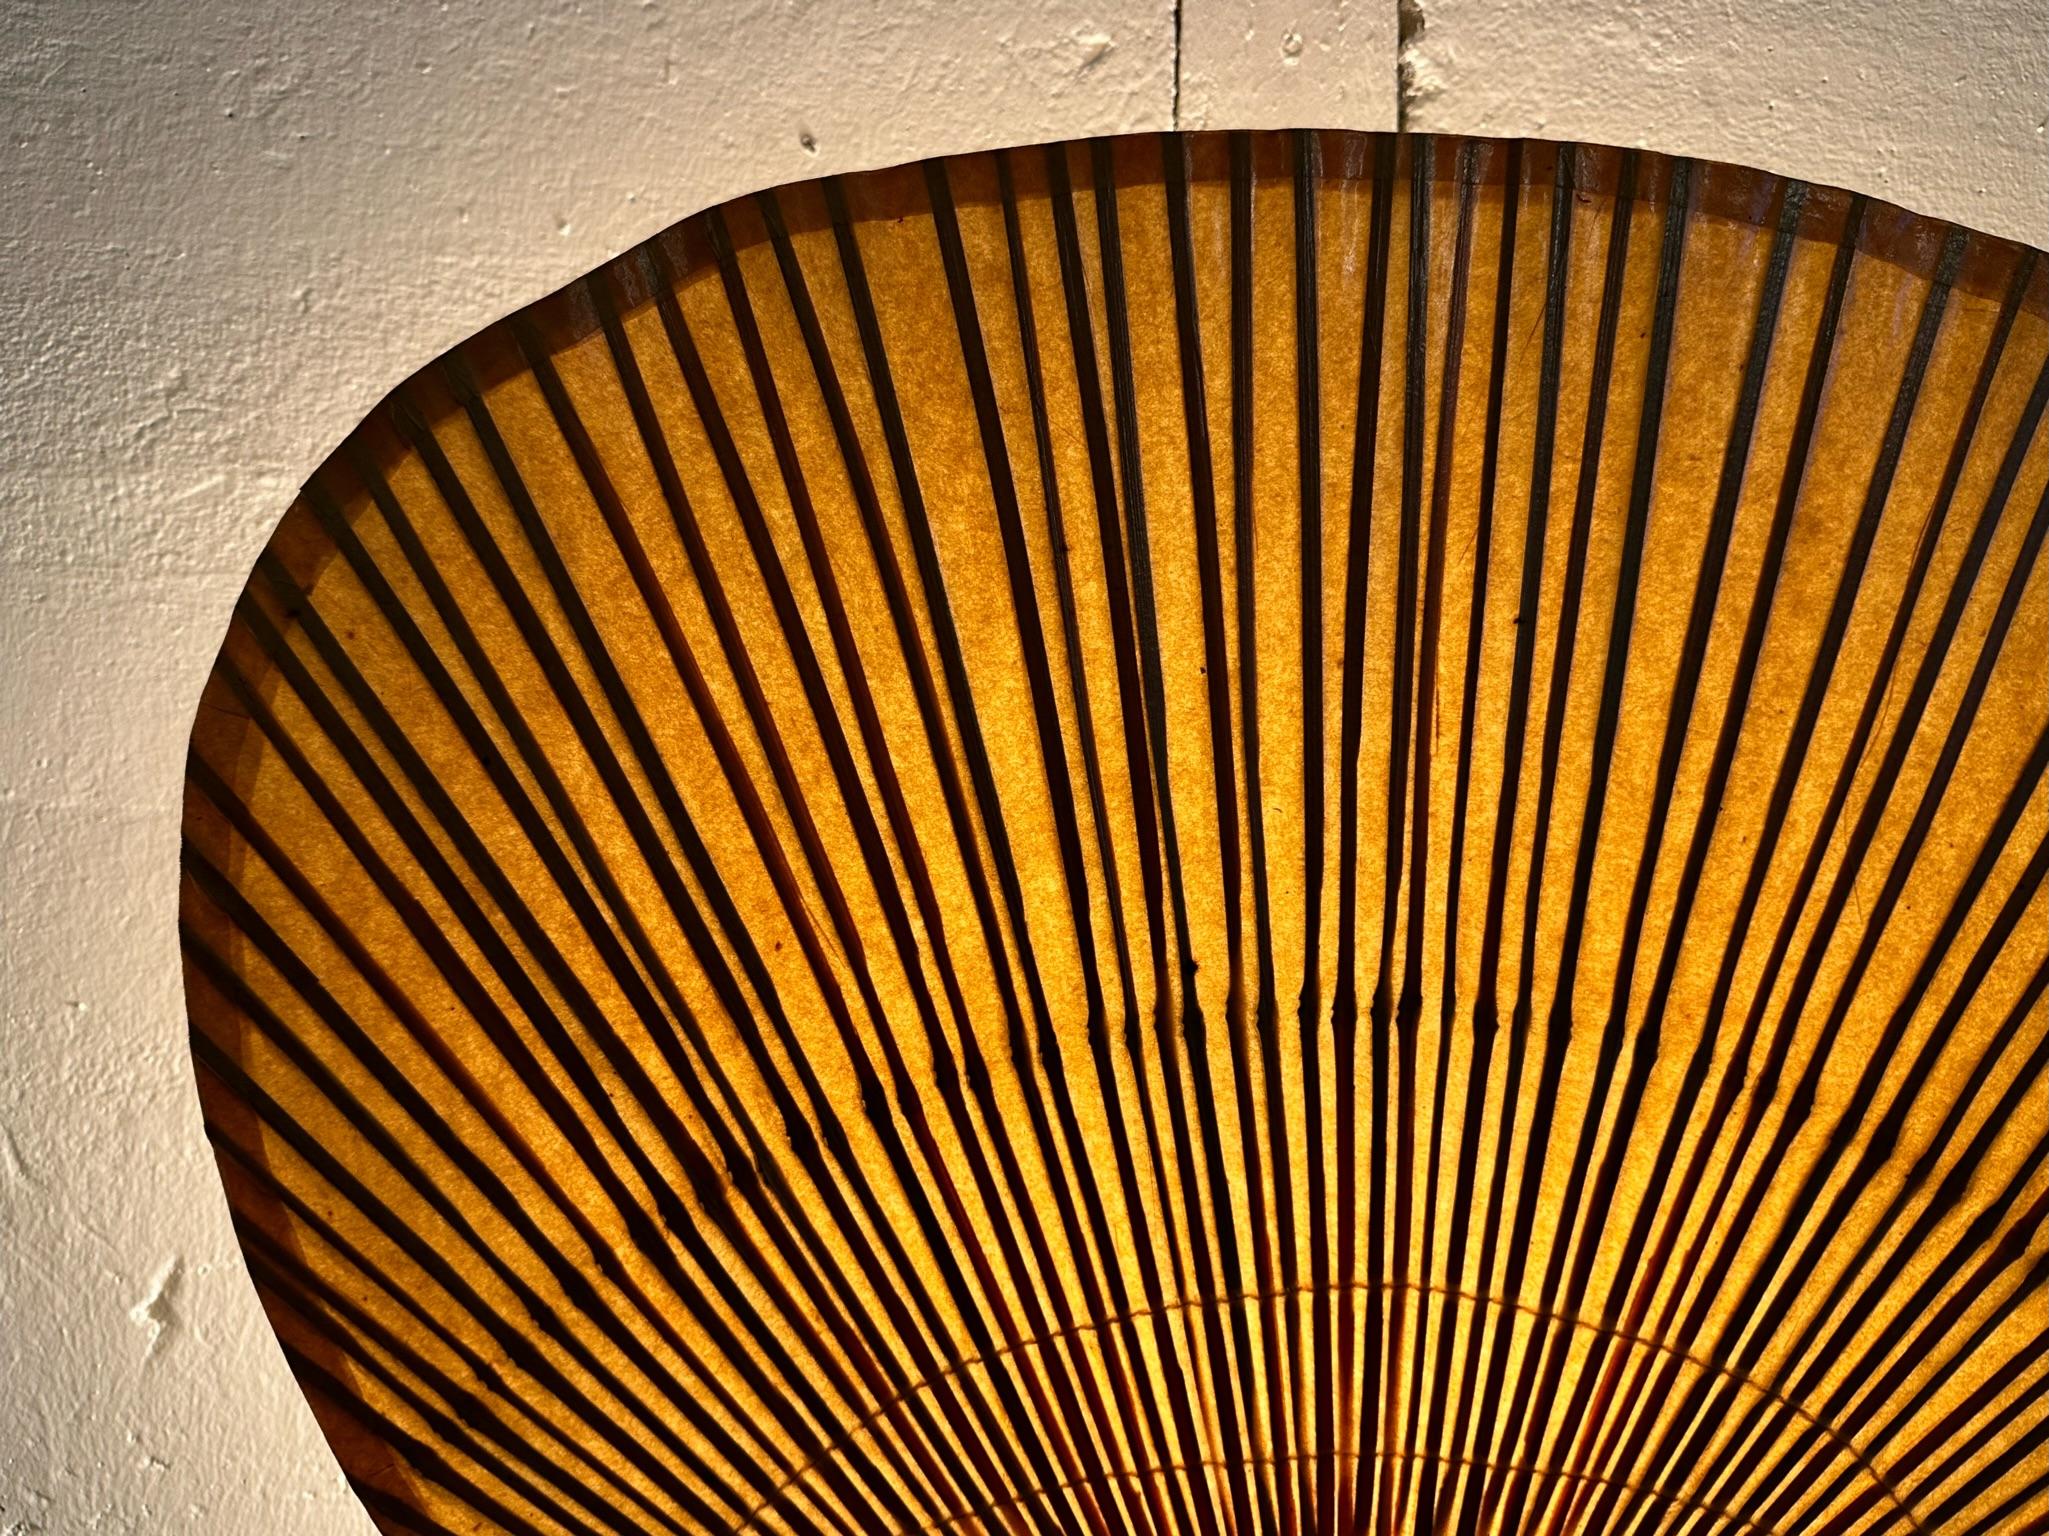 Late 20th Century Ingo Maurer Uchiwa iii Wall Lamp Sconce for M-Design, 1973